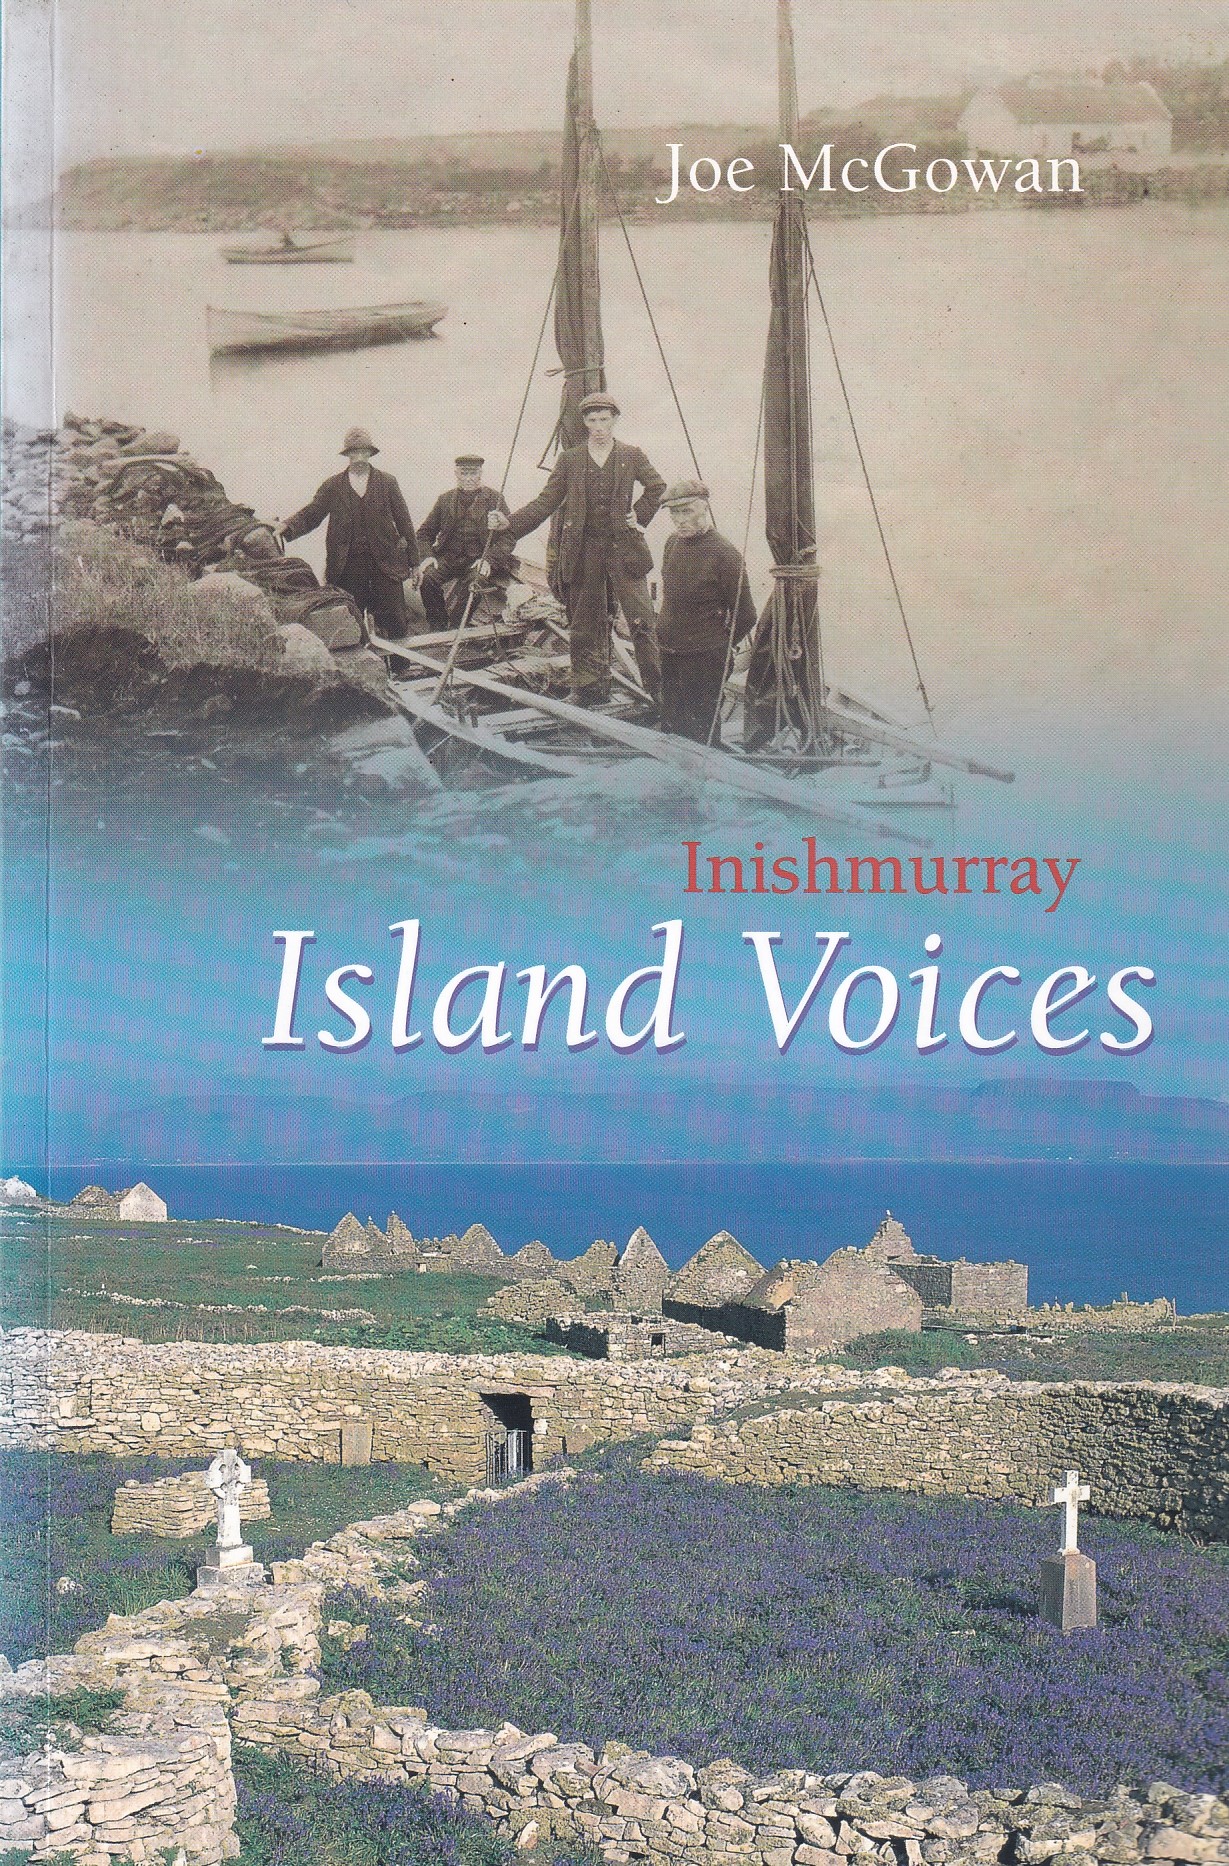 Inishmurray: Island Voices by Joe McGowan